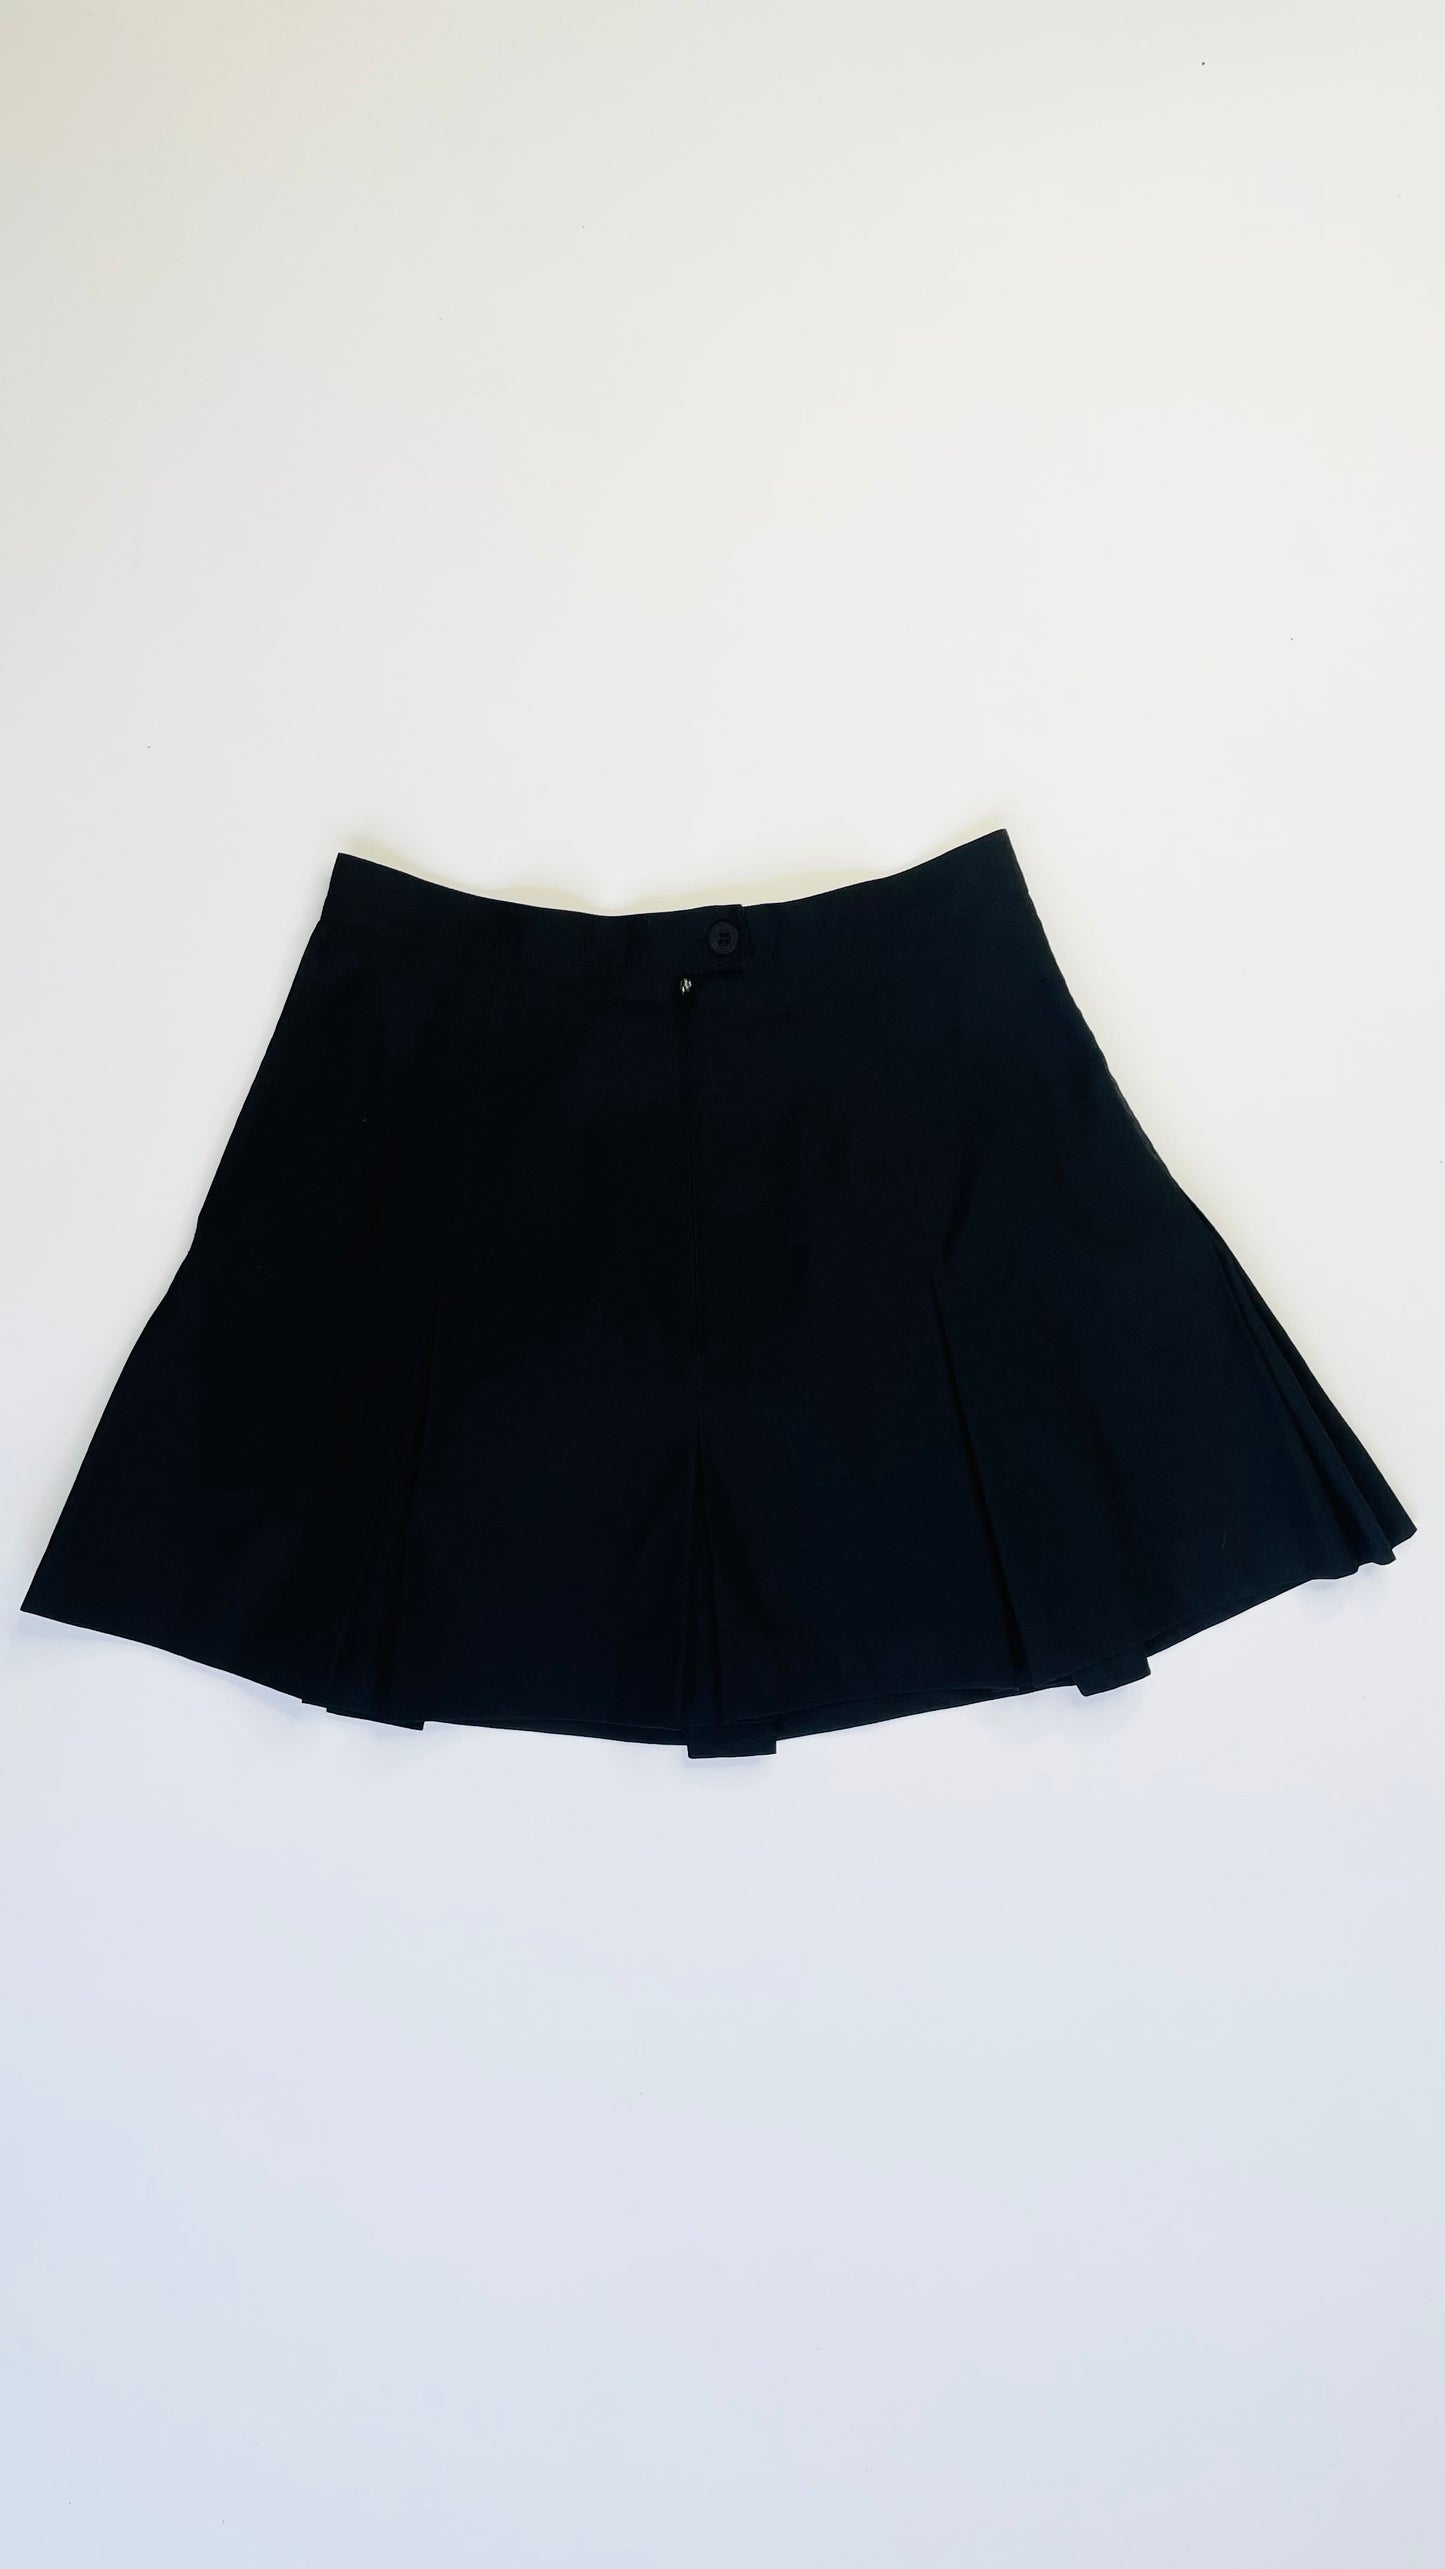 Vintage 80s Le Coq Sportif black pleated tennis skirt - Size 8